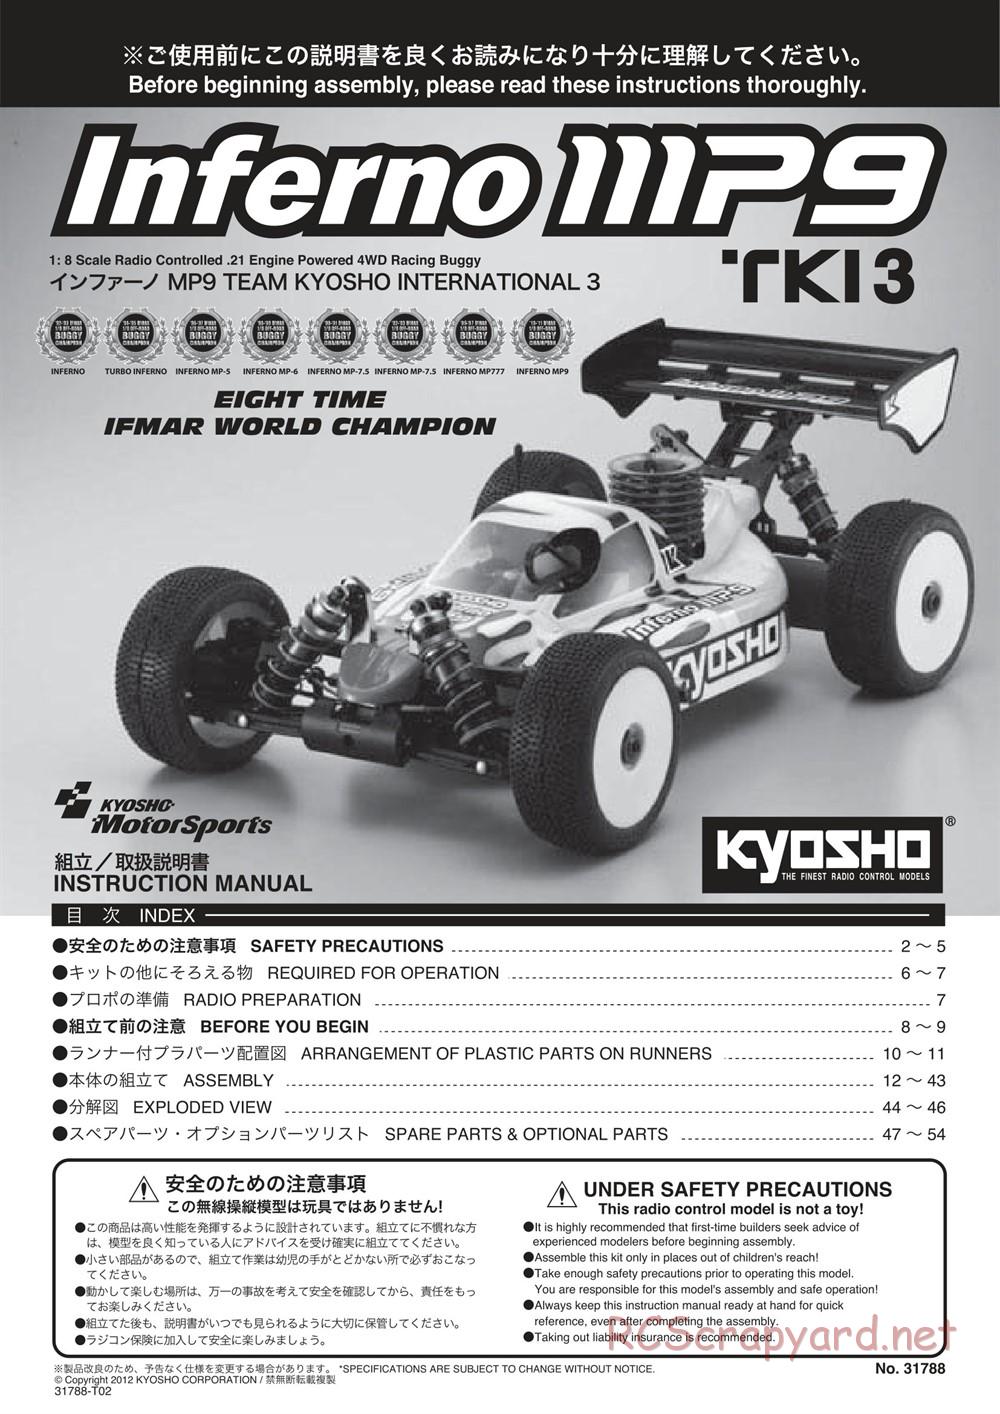 Kyosho - Inferno MP9 TKI3 - Manual - Page 1